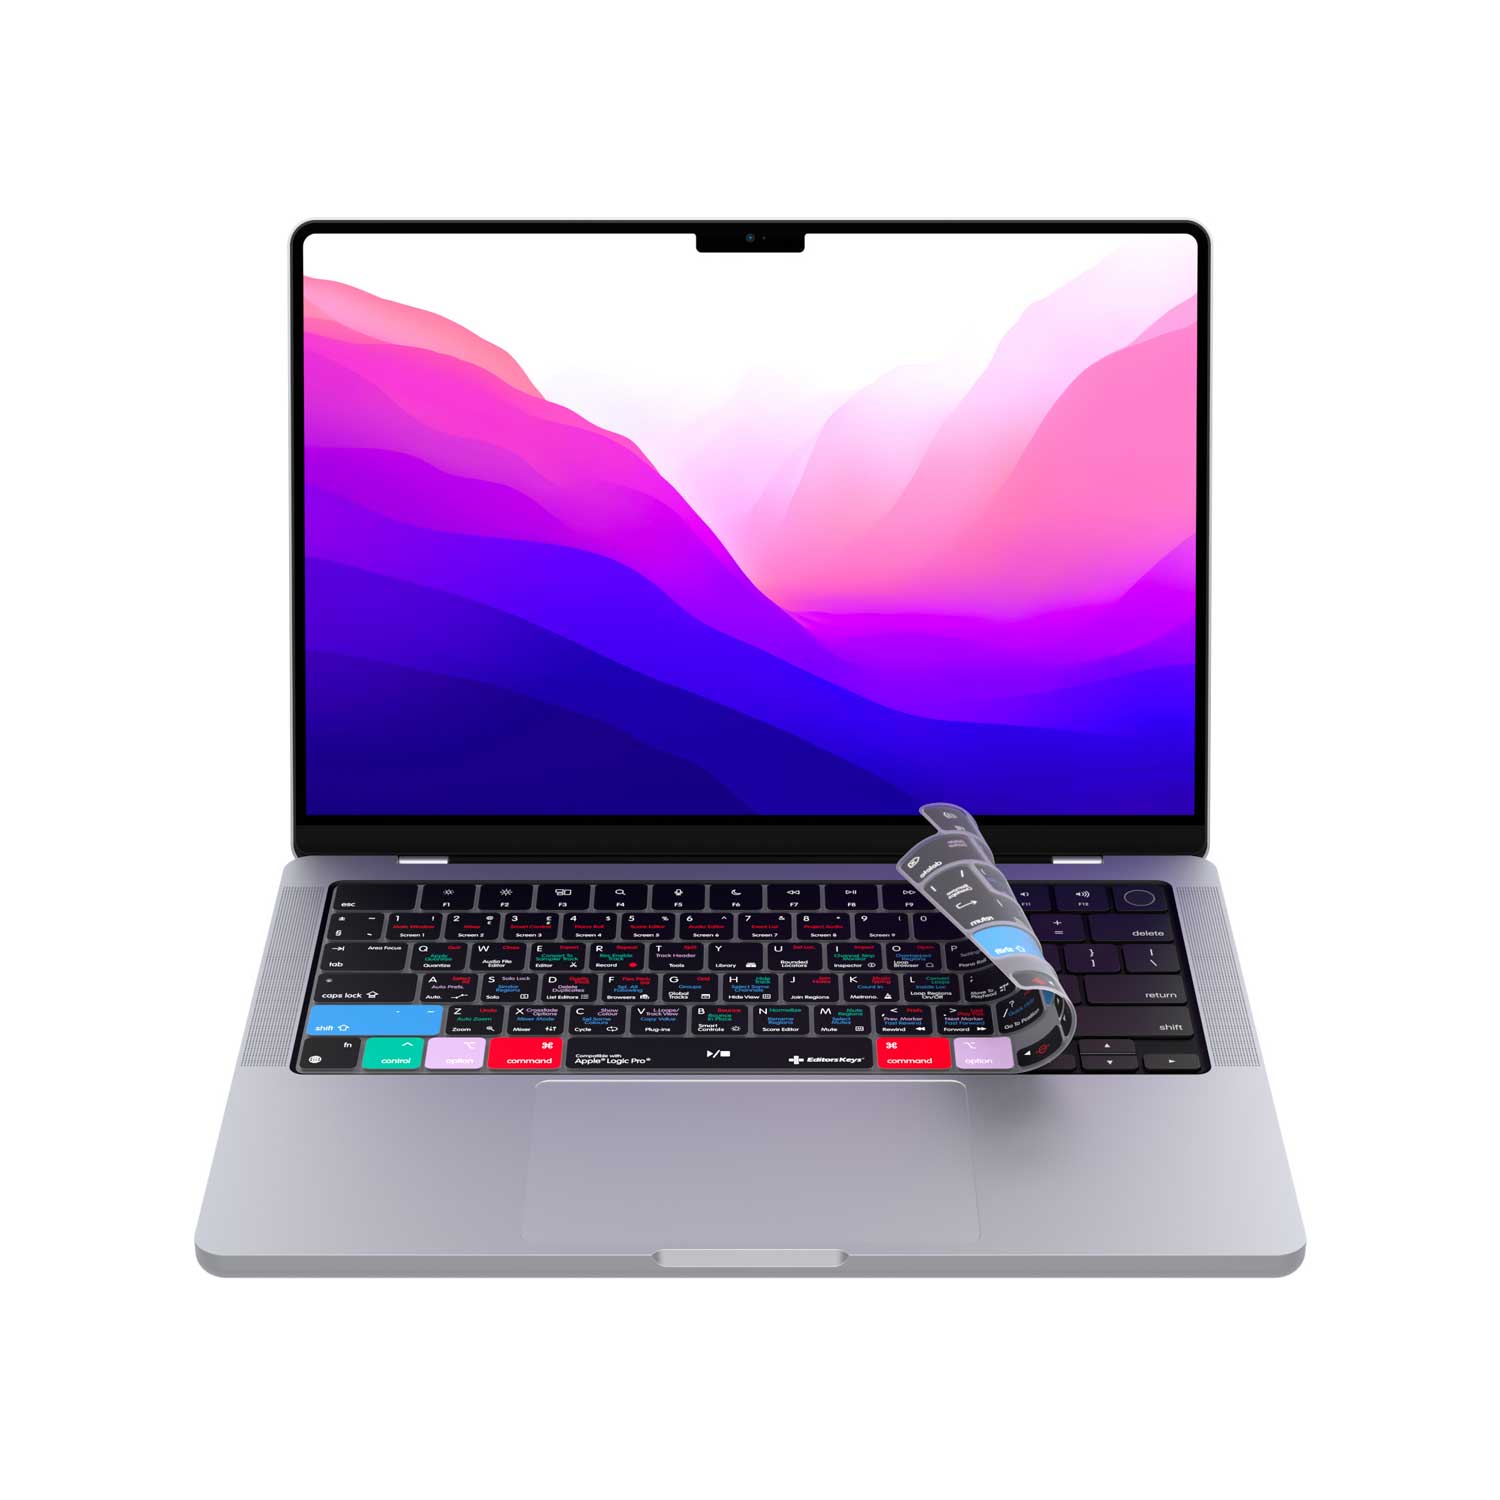 Apple Logic Pro Keyboard Covers for MacBook and iMac - Editors Keys